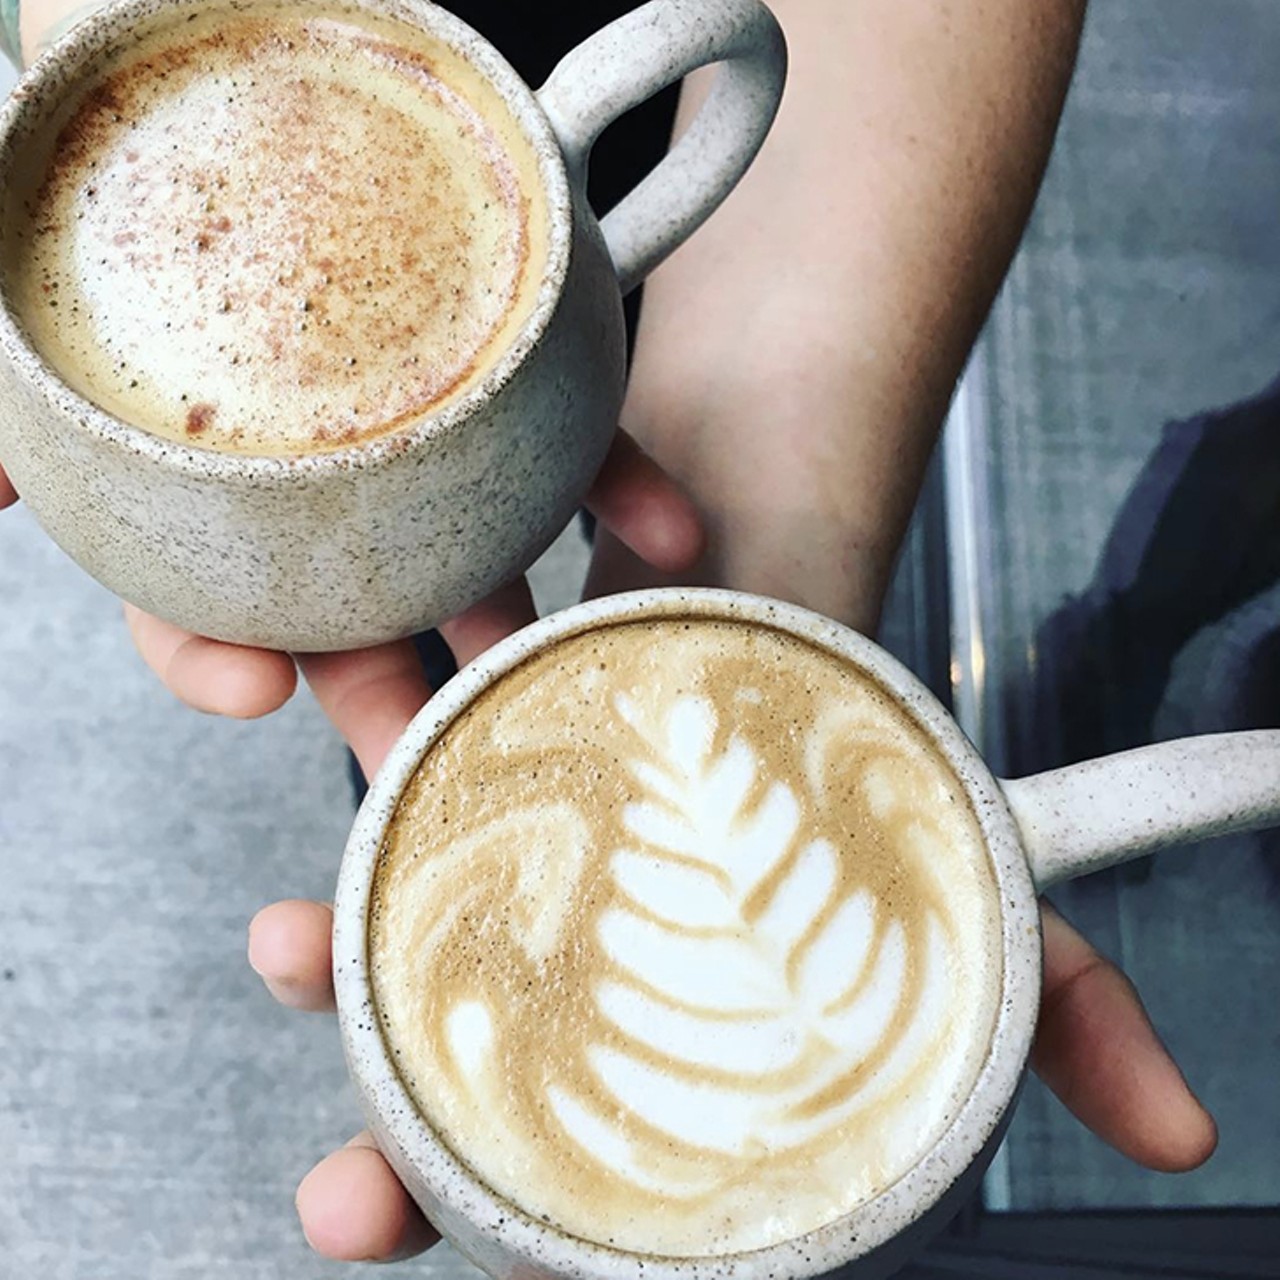 Rooted Juicery
Pumpkin-spice latte
3010 Madison Road, Oakley
Photo via Instagram.com/RootedJuicery